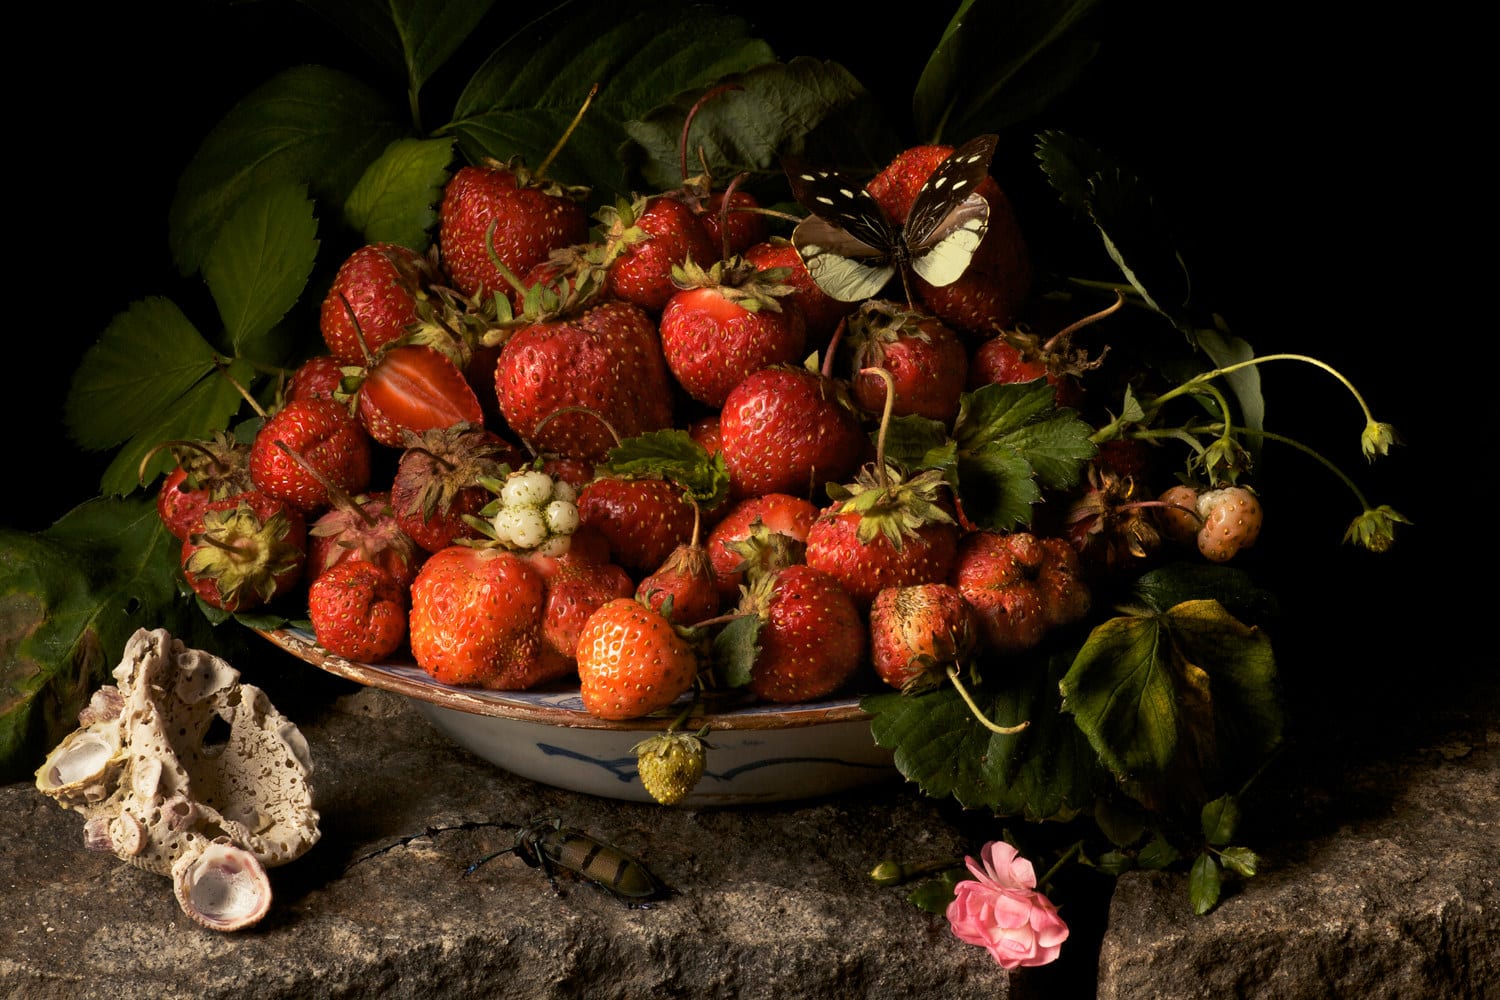 Paulette Tavormina, Strawberries, 2009